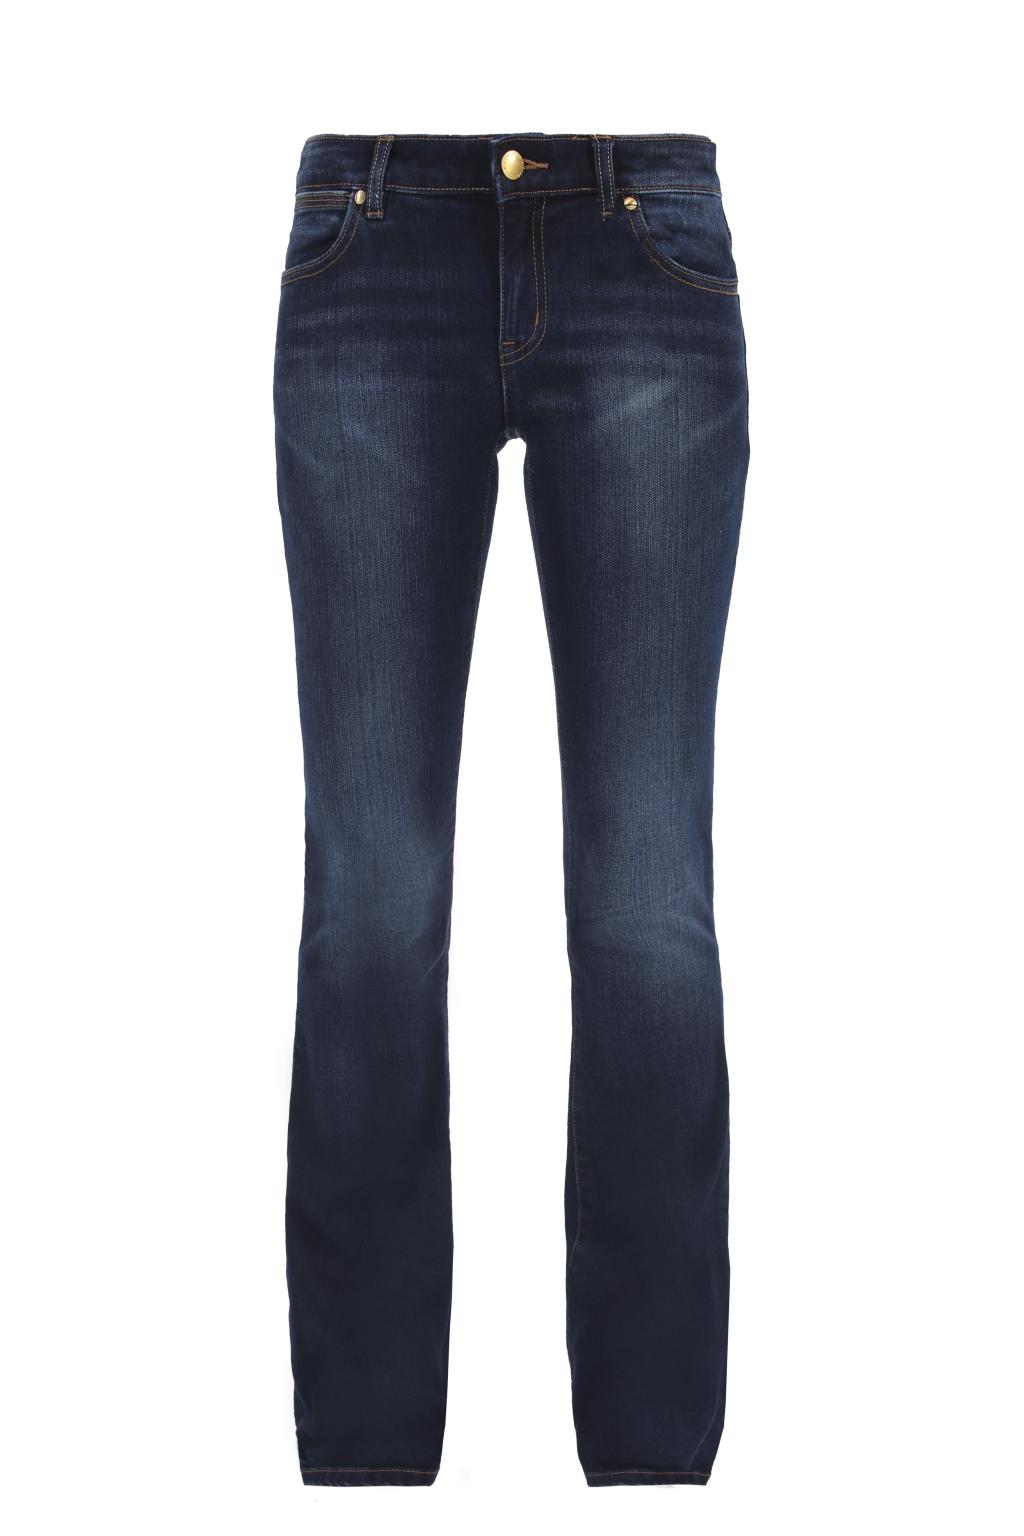 michael kors jeans canada